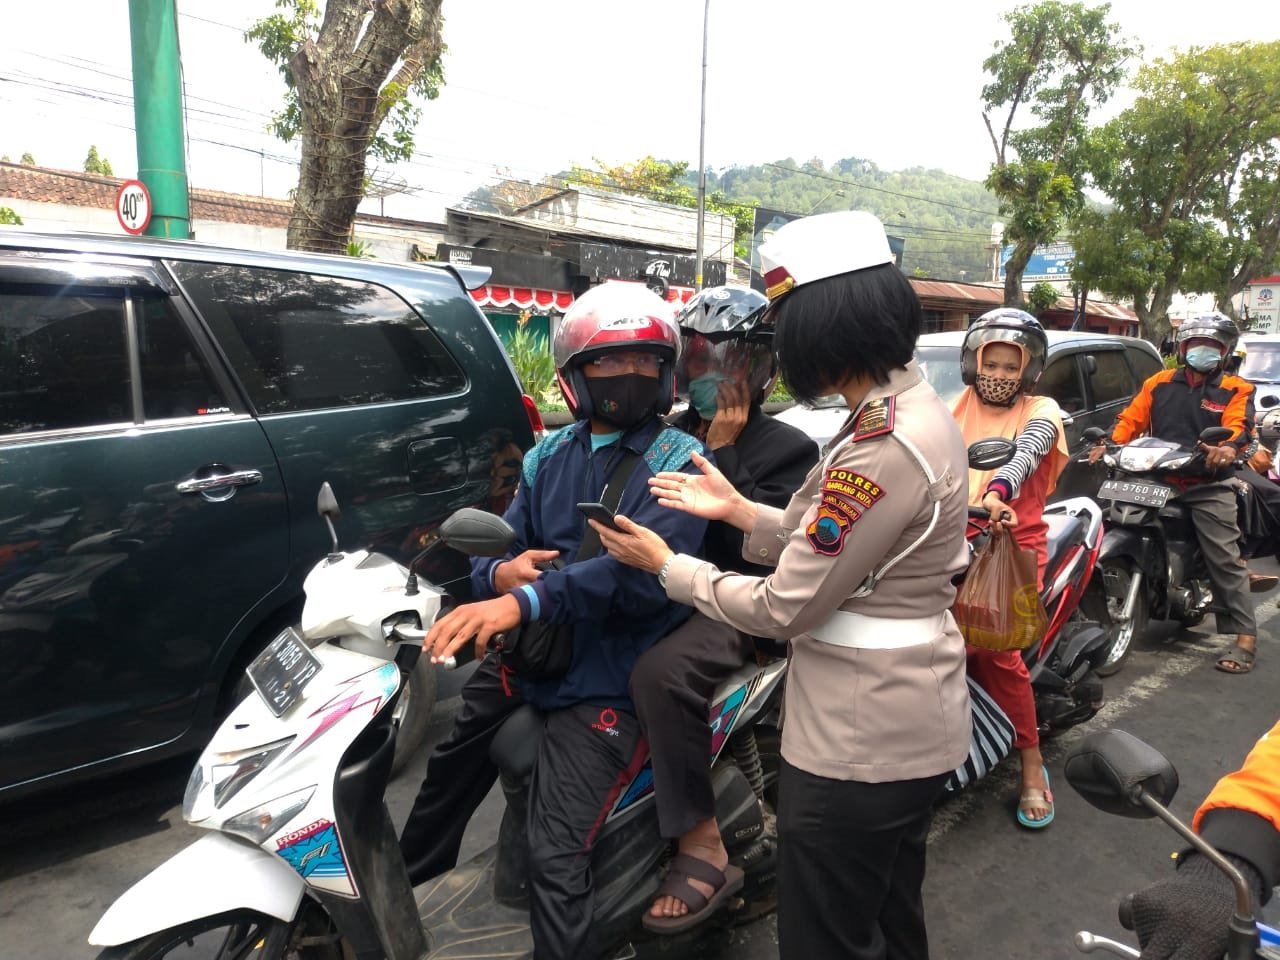 SOSIALISASI. Jajaran polisi Polres Magelang Kota mensosialisasikam aplikasi Peduli Lindungi kepada pengguna jalan yang melintas, Sabtu (4/9).